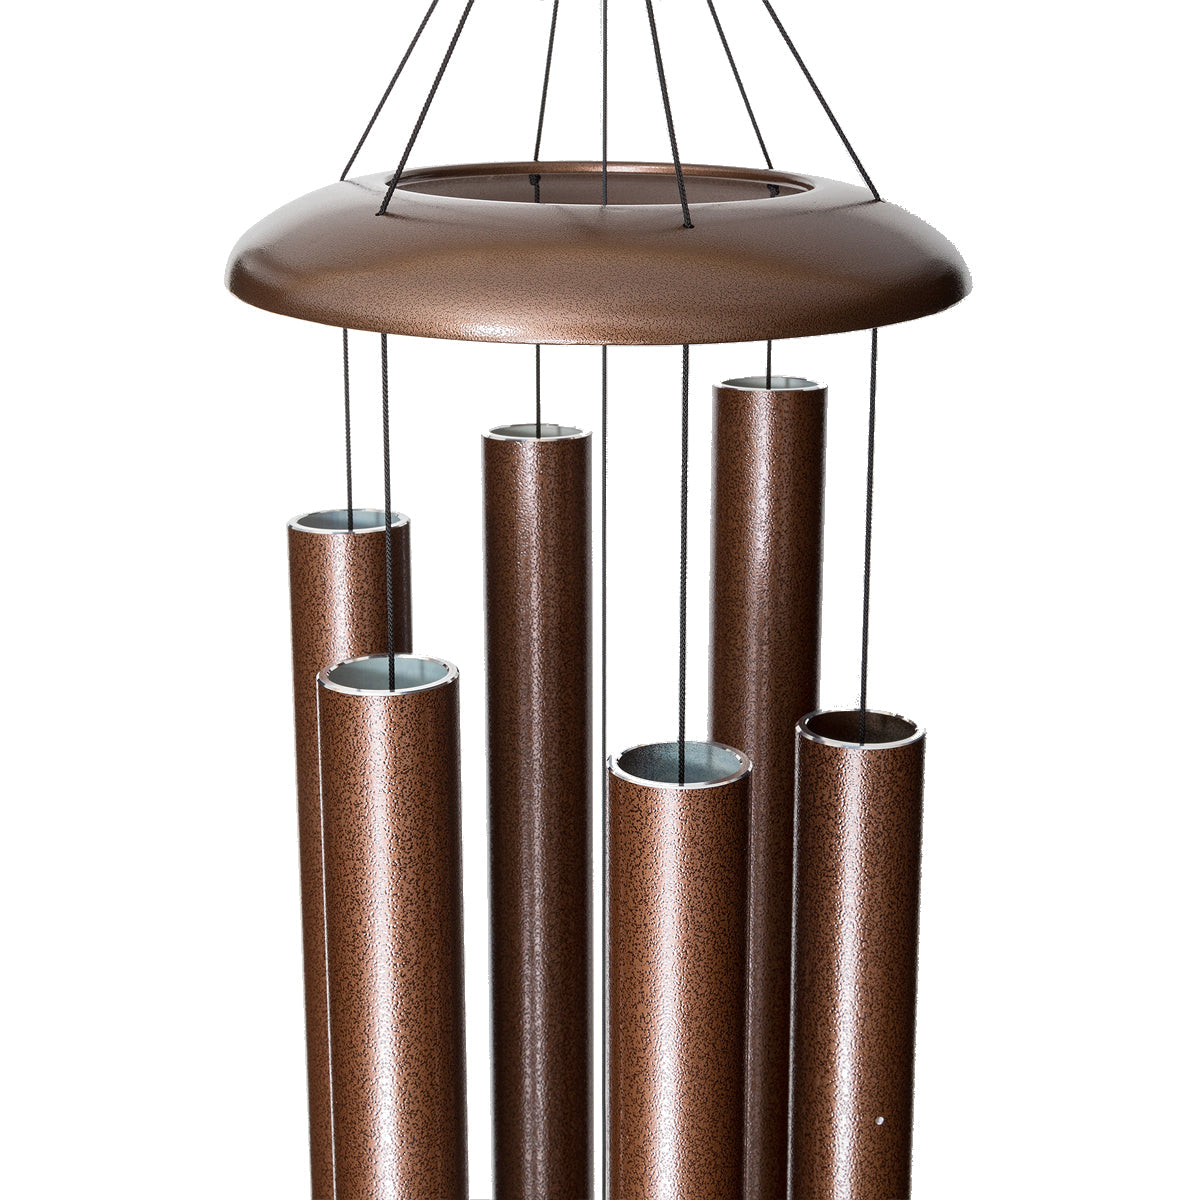 Corinthian Bells 78-inch Wind Chime - Copper Vein